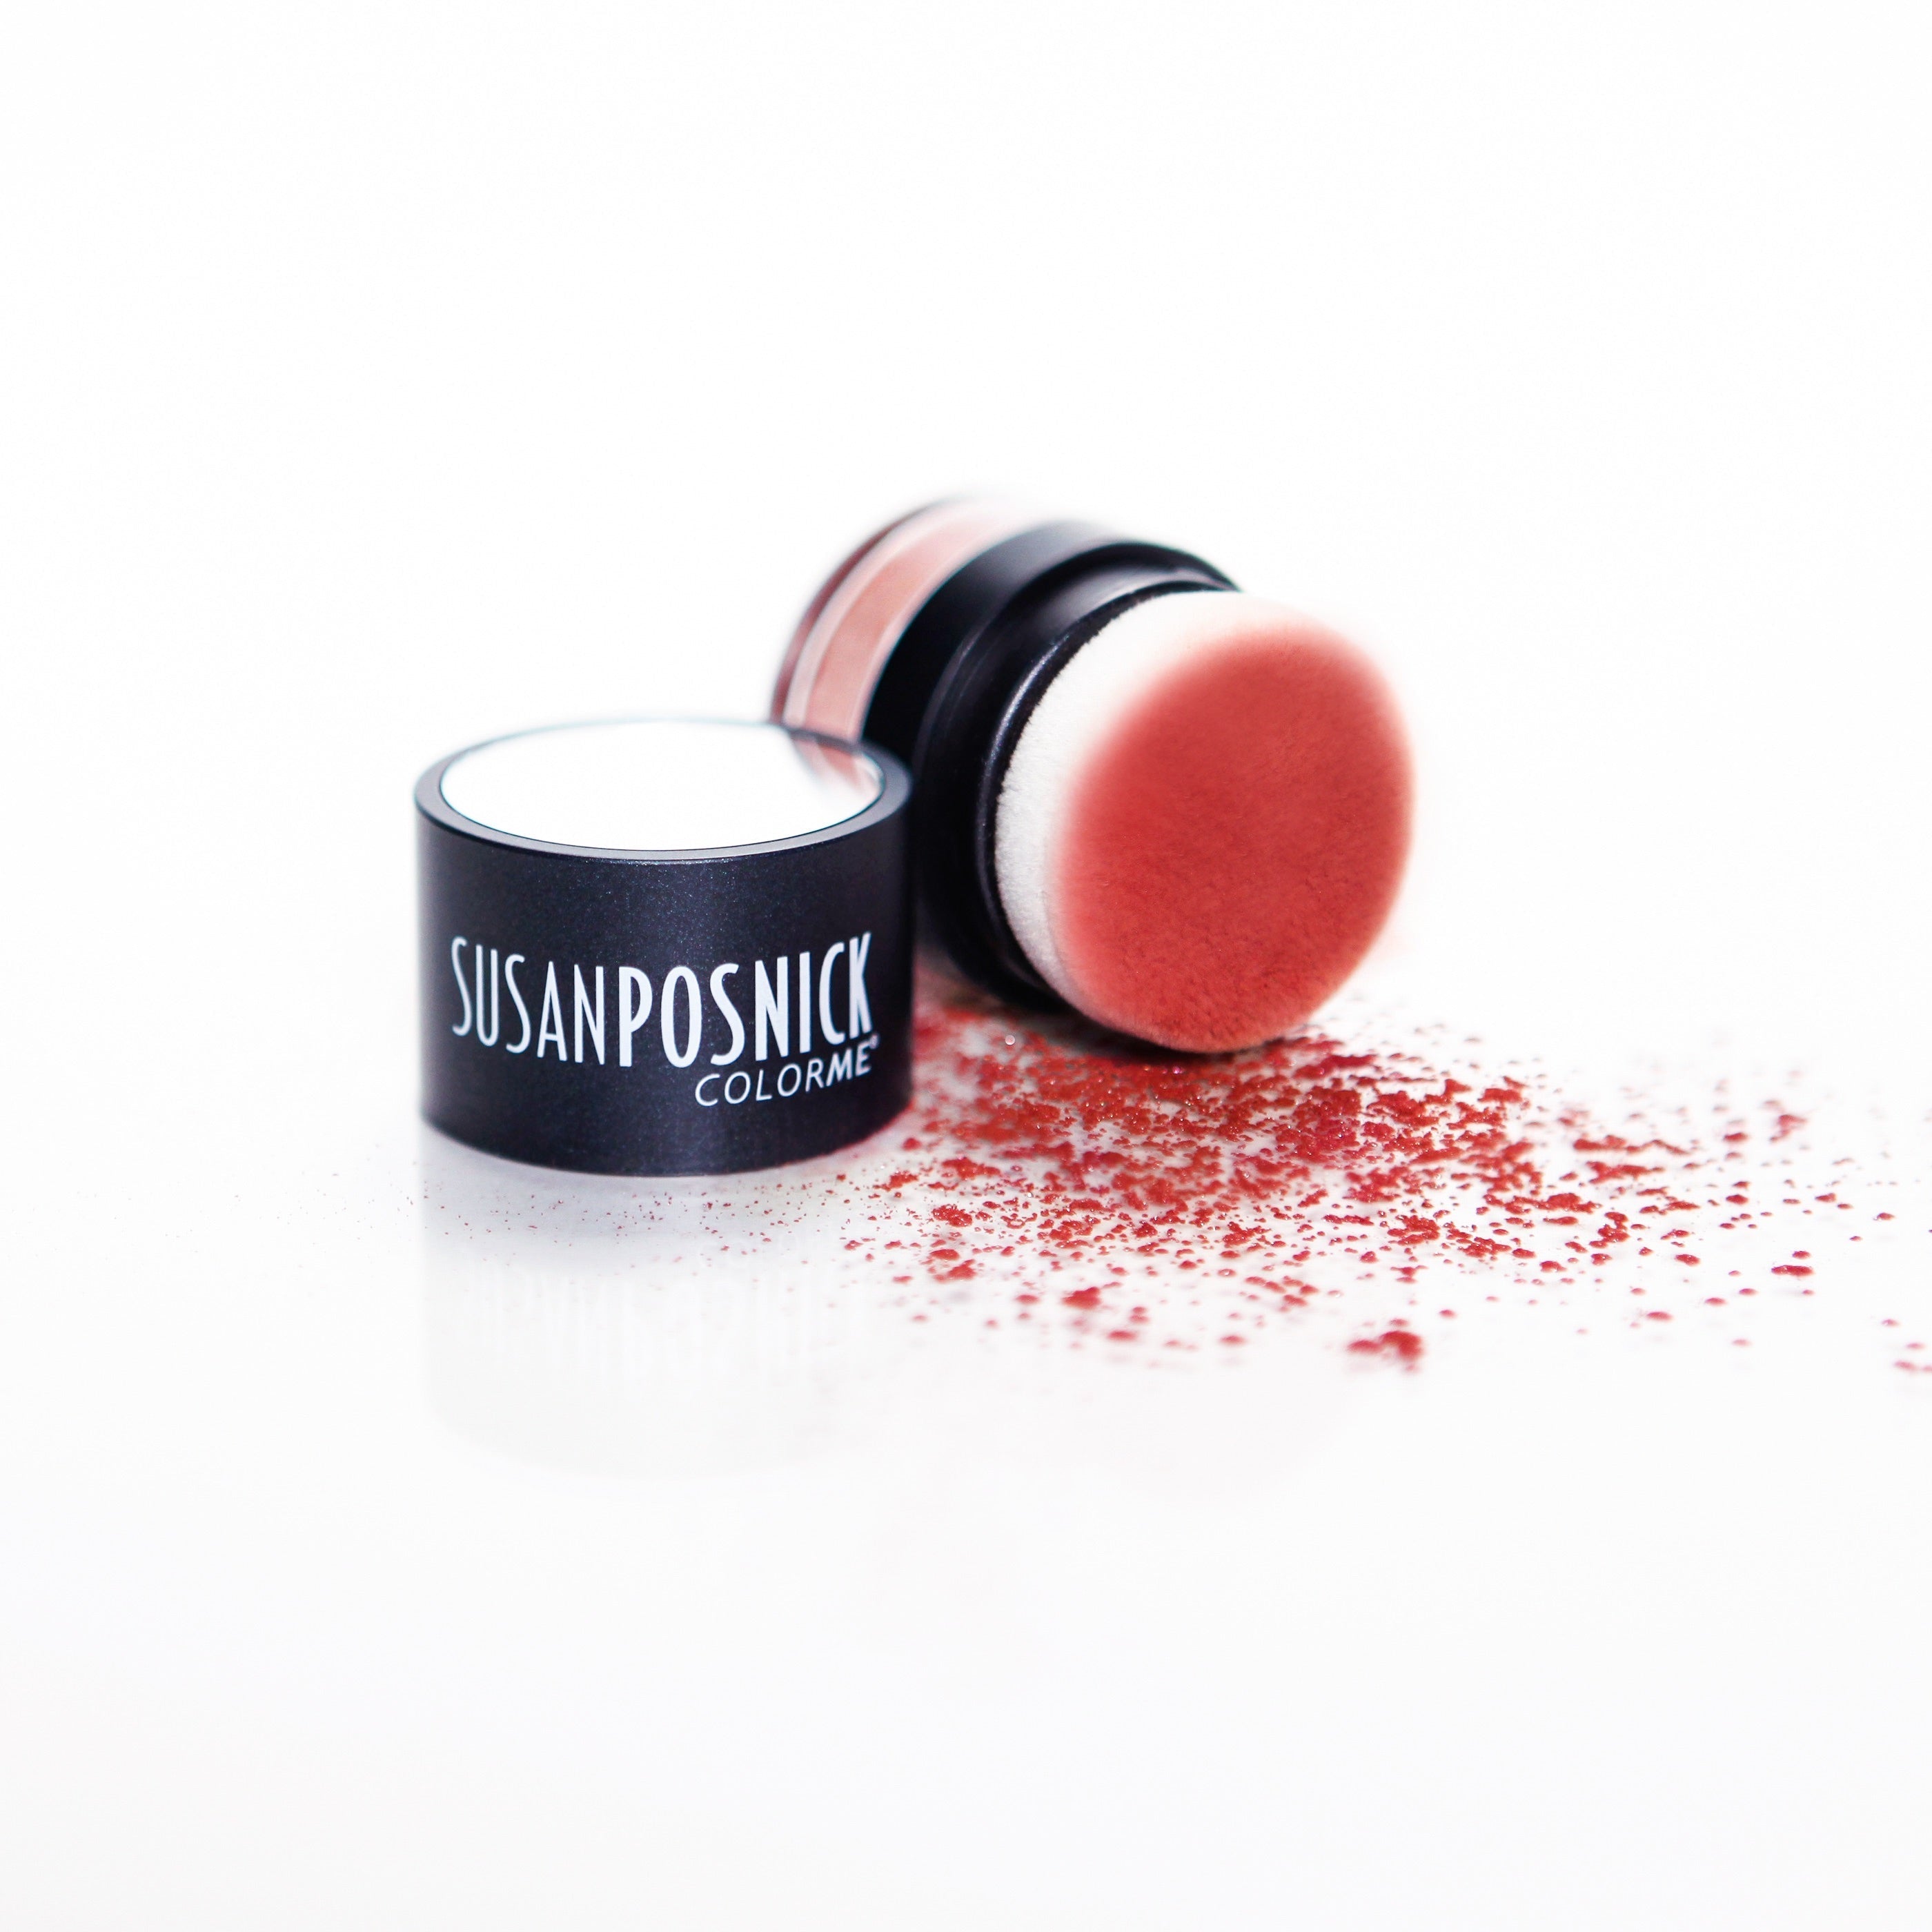 COLORME Mineral Powder Blush, Eyeshadow, Lip Tint &amp; Sun Protection Foundation Susan Posnick Cosmetics 